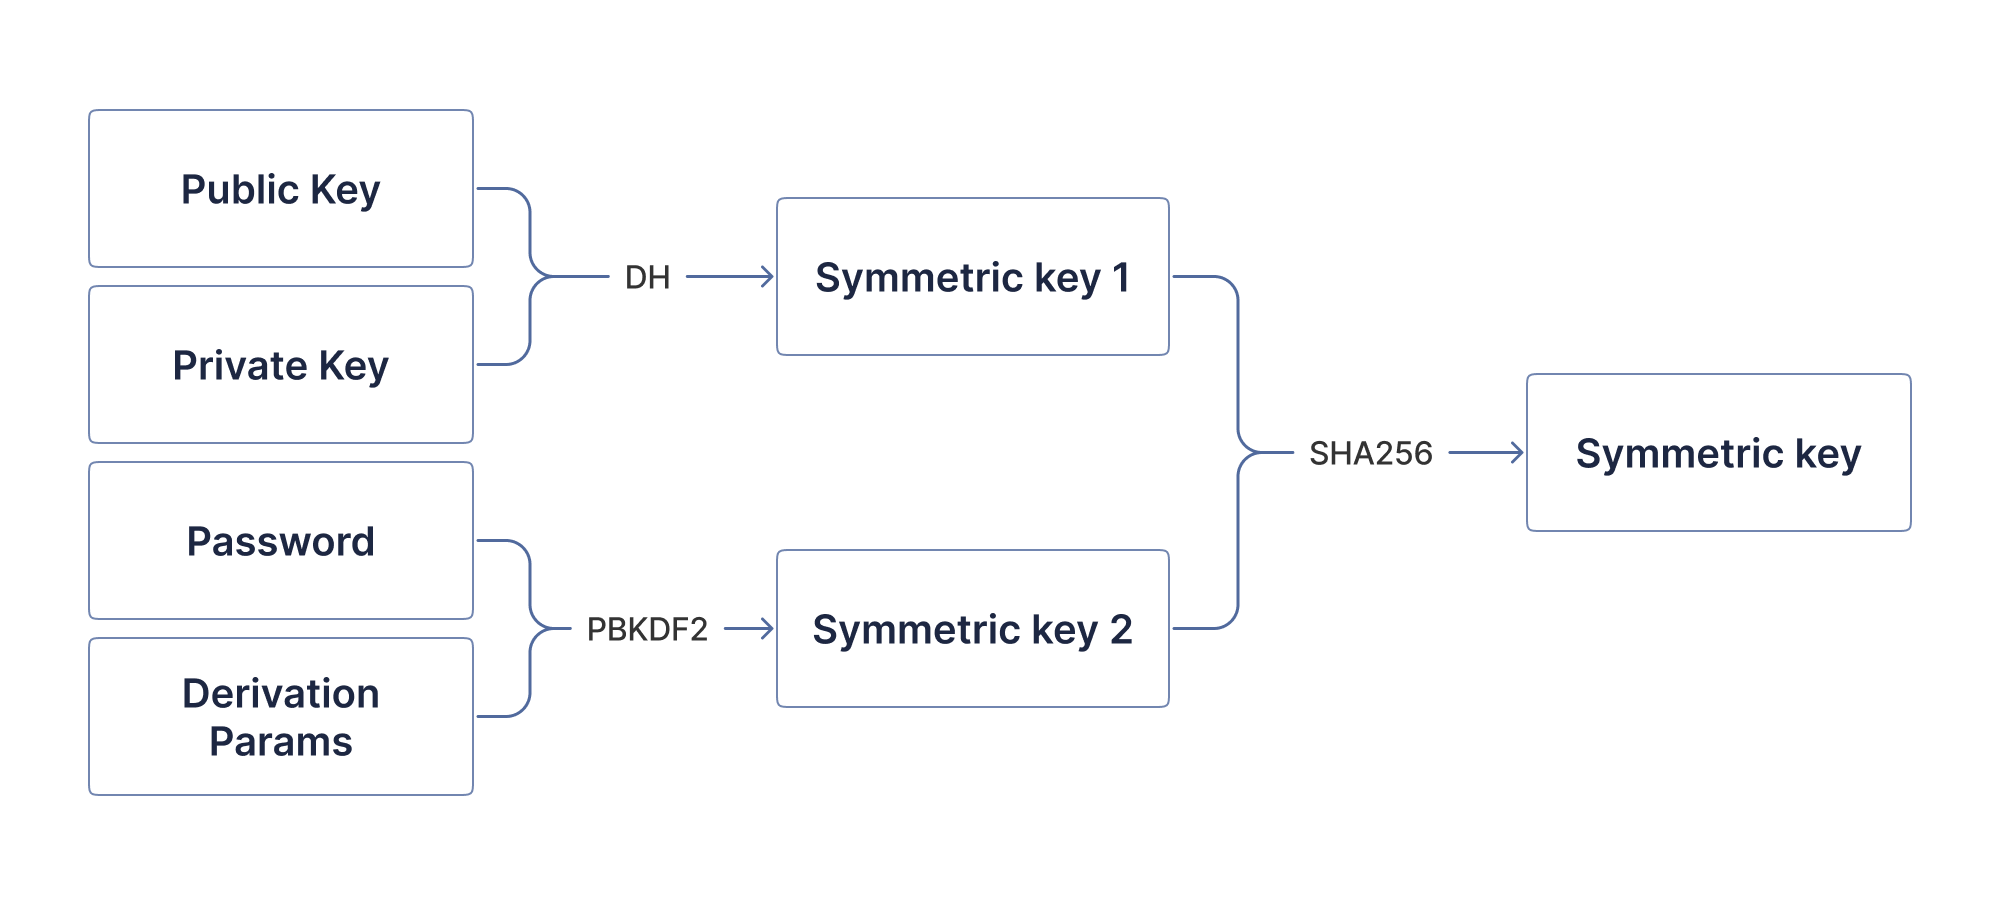  Image 9: Simplified visualisation of Symmetric Key